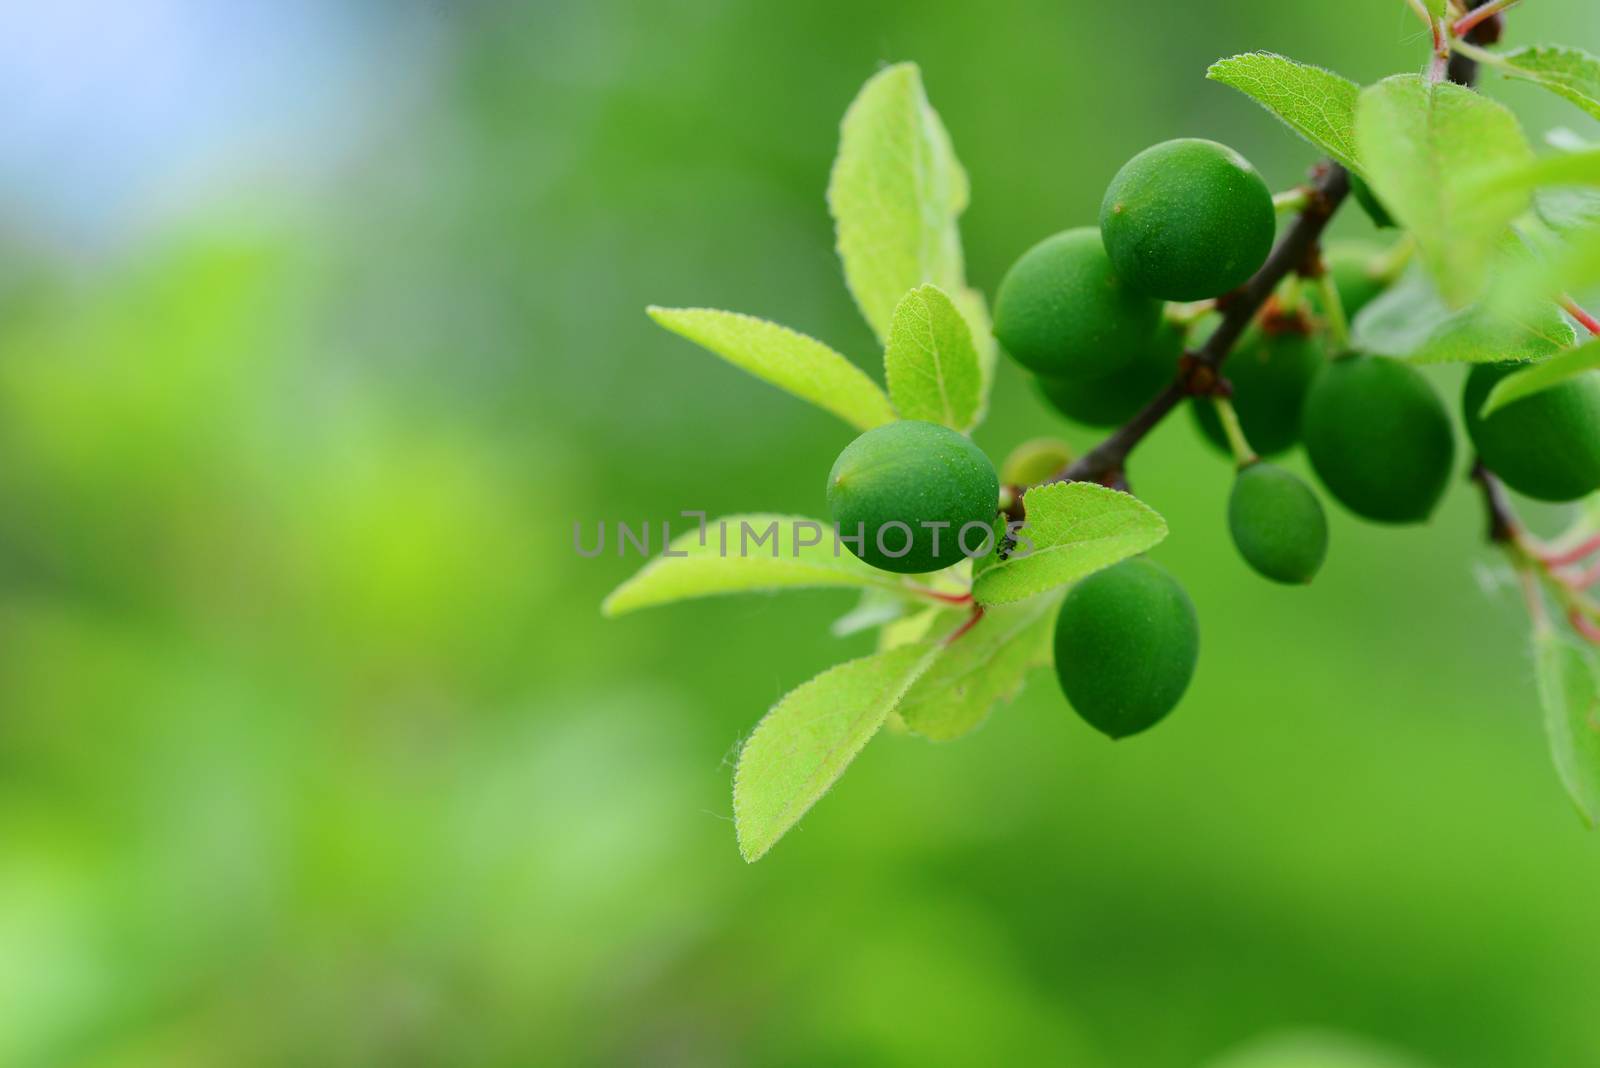 Green Blackthorn fruits by tony4urban